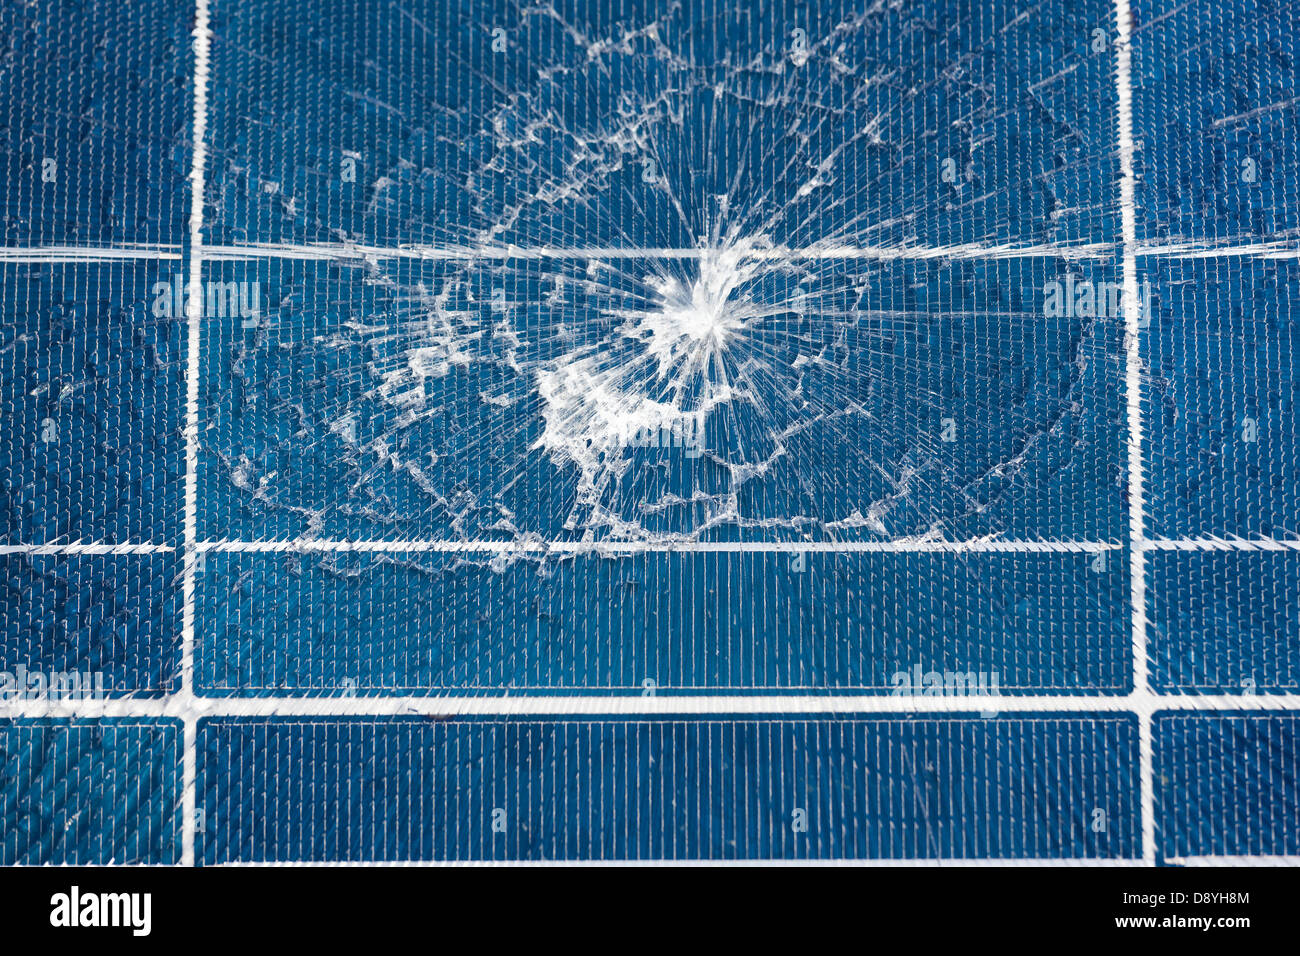 Panel Solar chino dañados roto debido al impacto. Shattered Glass ráfaga agrietado cerca. Importación desde, fabricada en China. Foto de stock